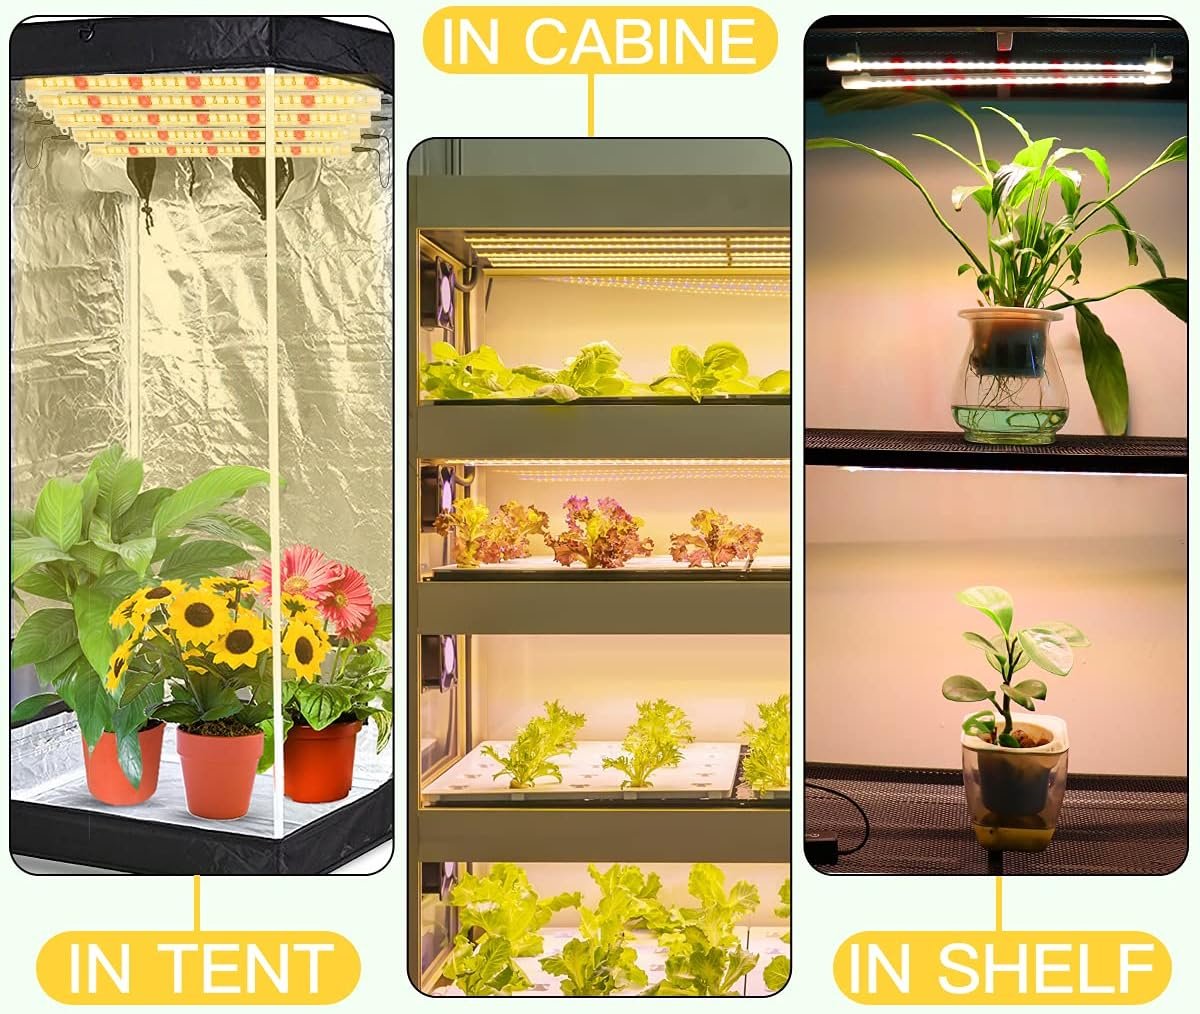 Grow Light Strips, LED 150-Bulb 3500K Dimmable Full Spectrum Plant Growing Lamp Bars for Indoor Plants Hydroponic Veg Succulent Seedling, Daisy-Chain Design